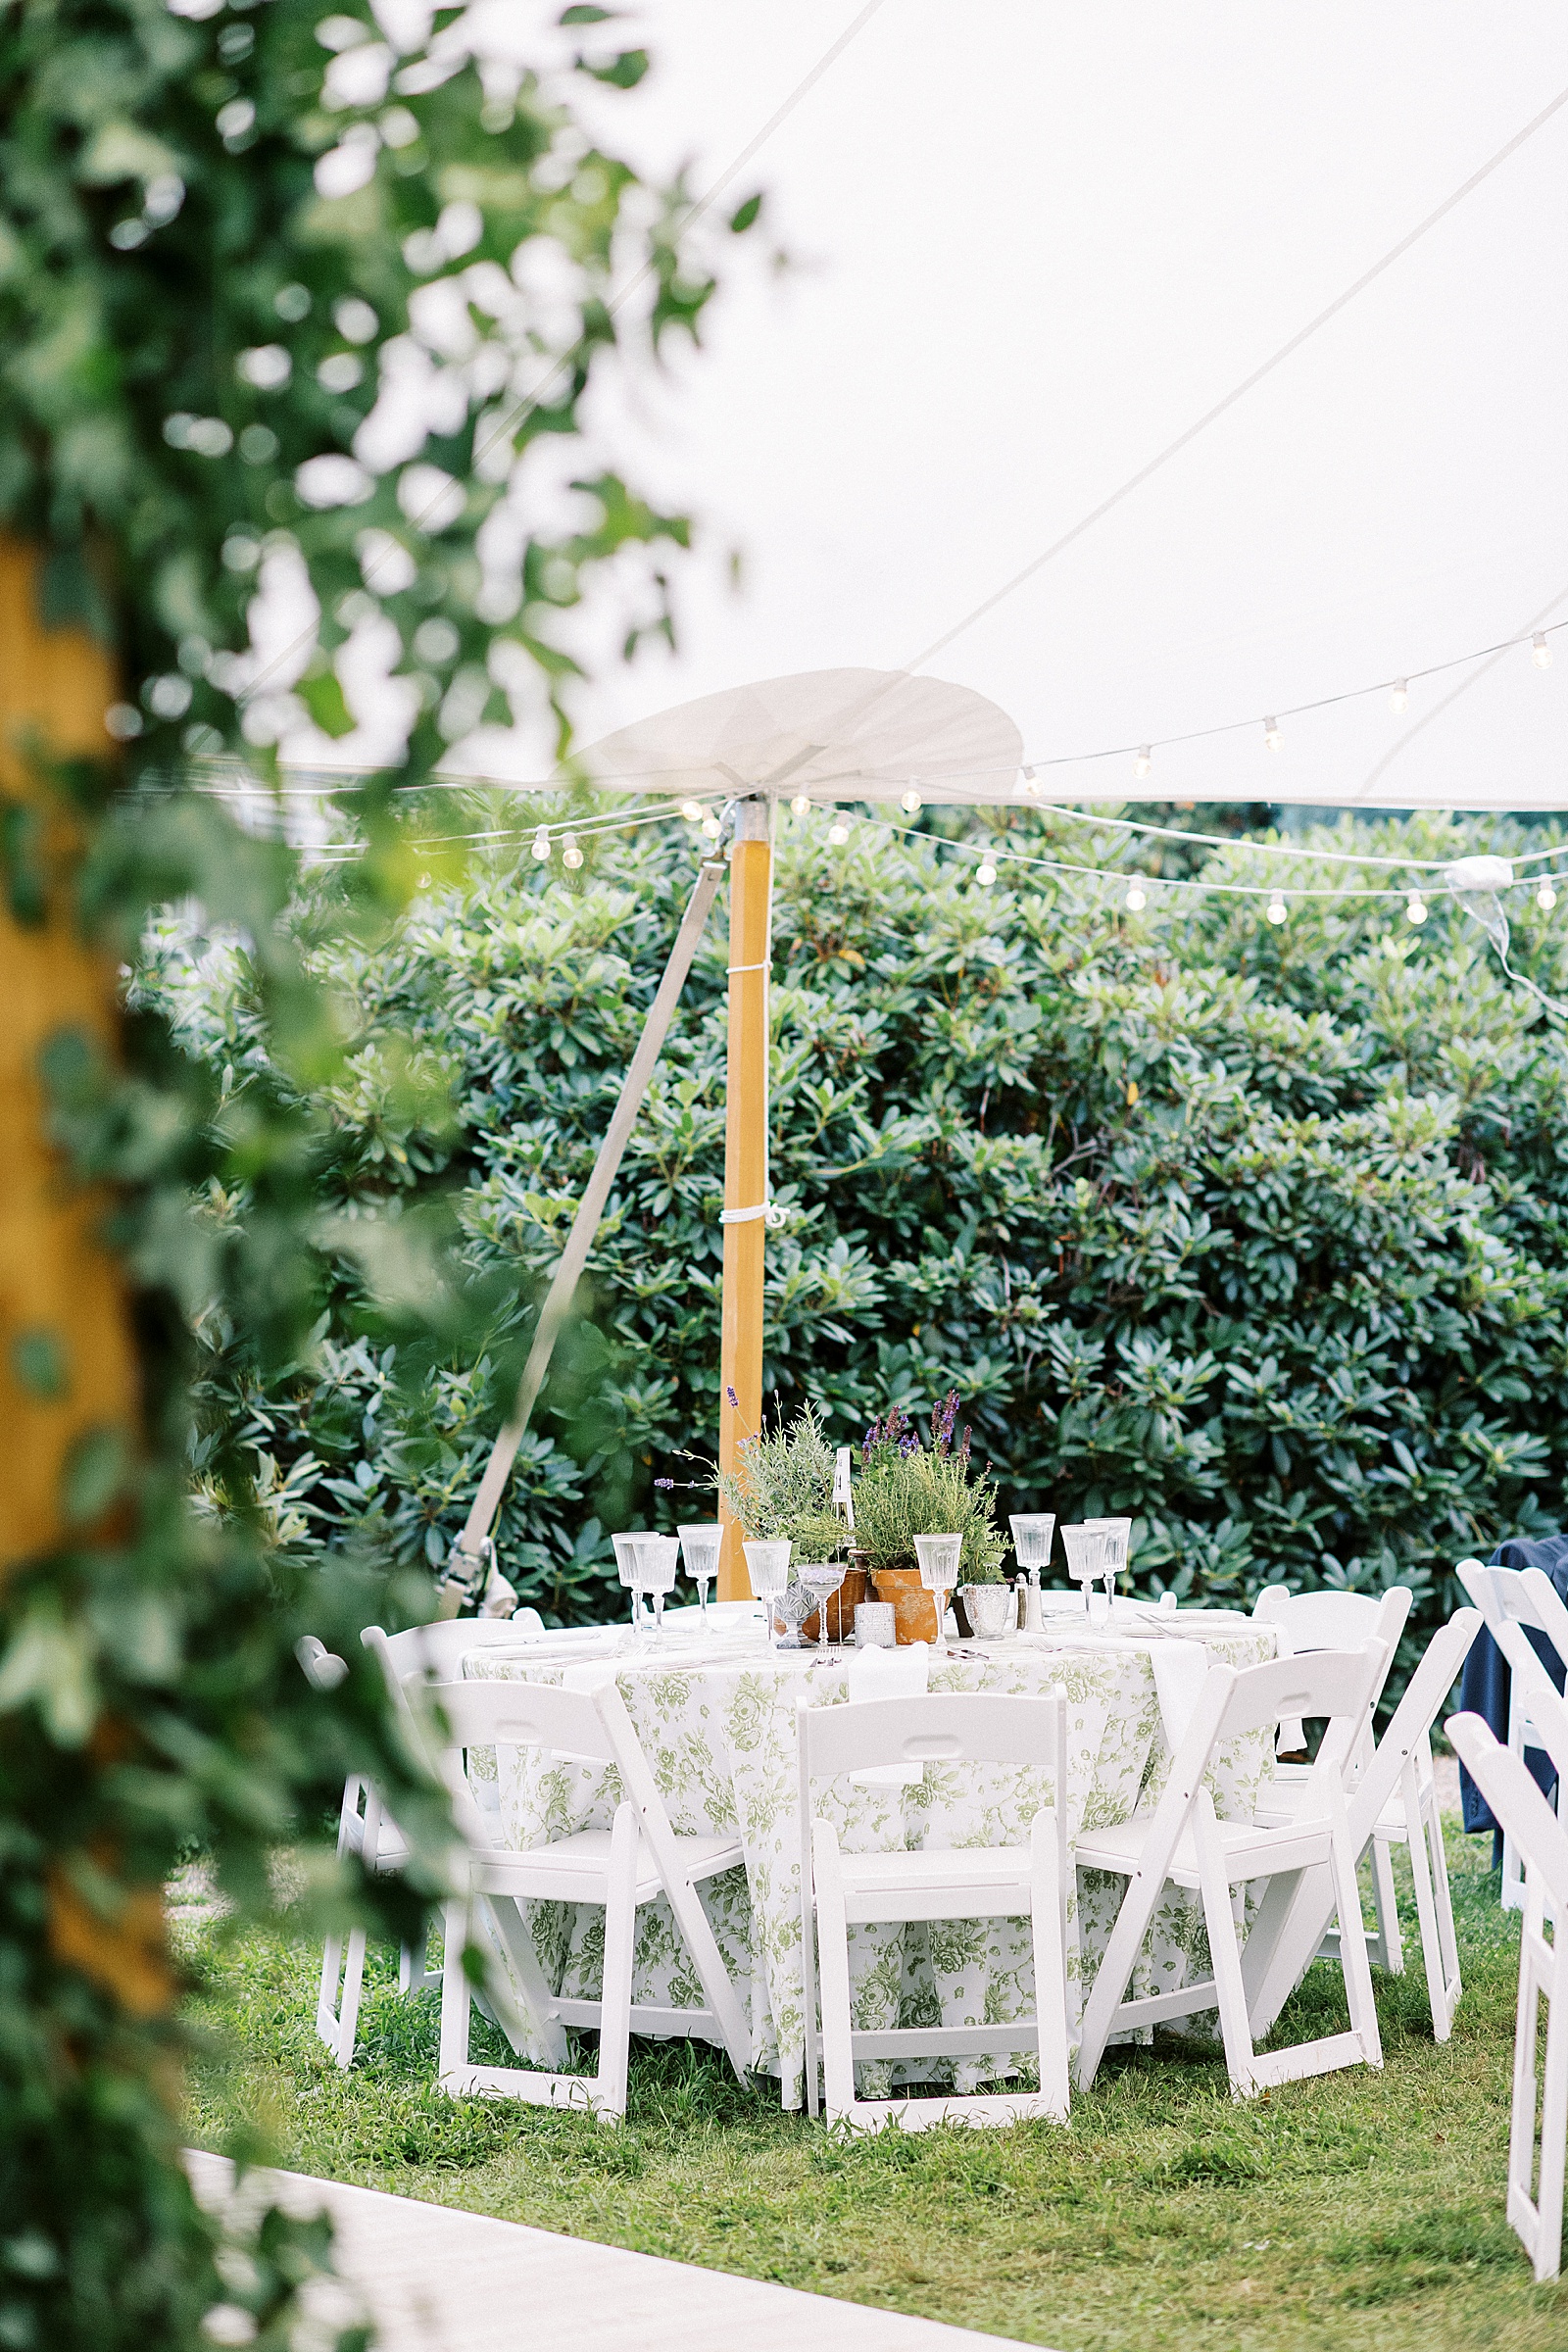 Table at an outdoor tented wedding reception in a garden. 